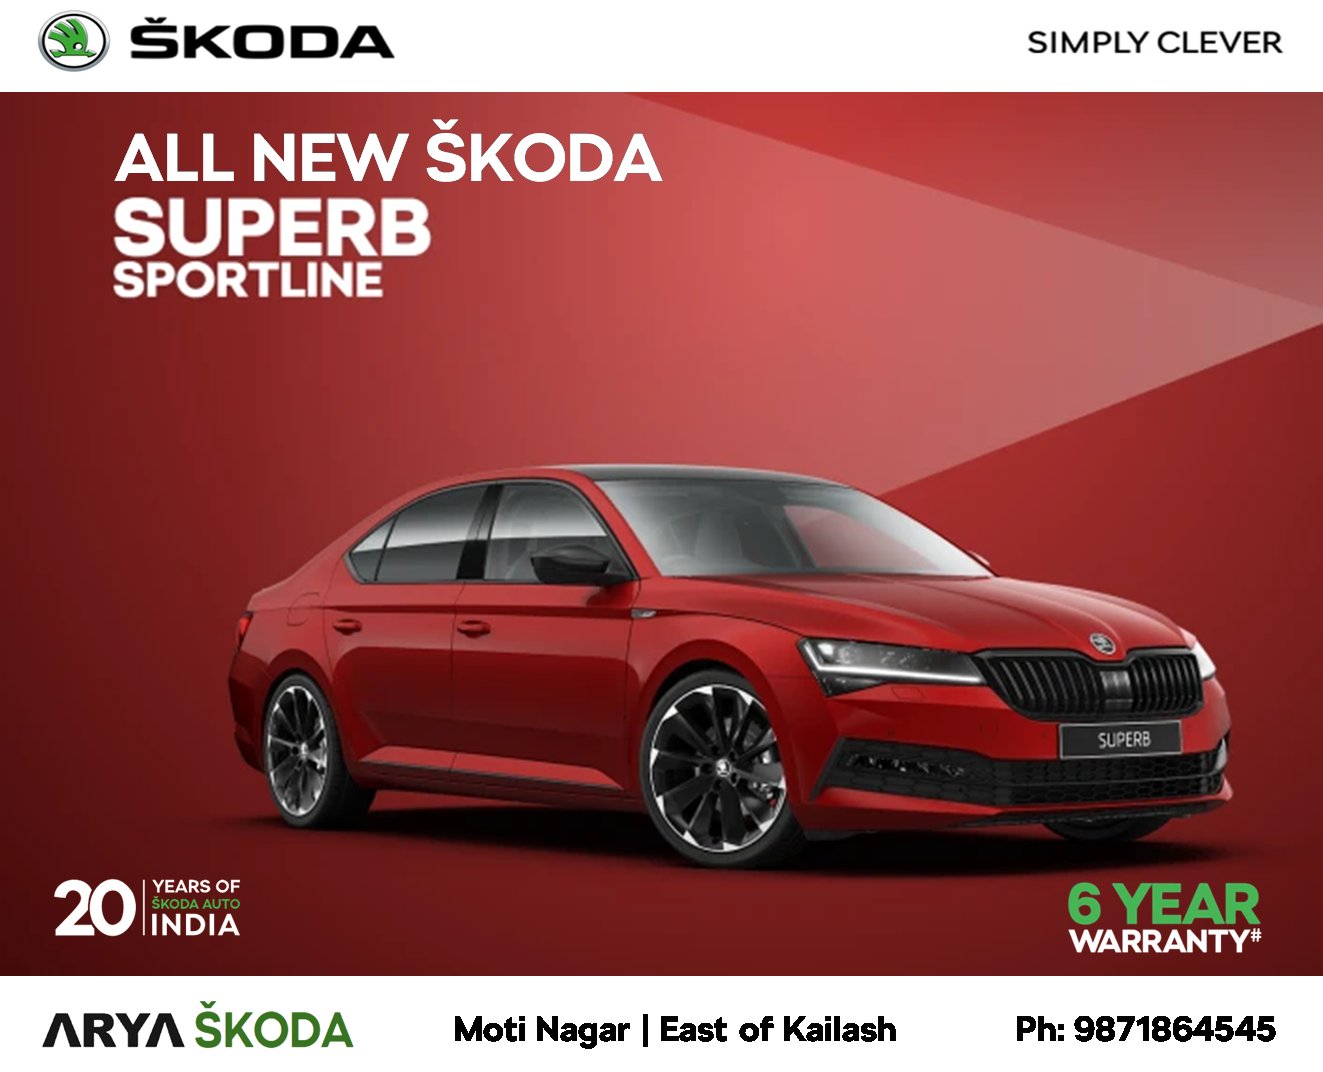 Skoda Superb Sportline: Skoda brings all-new Superb to India